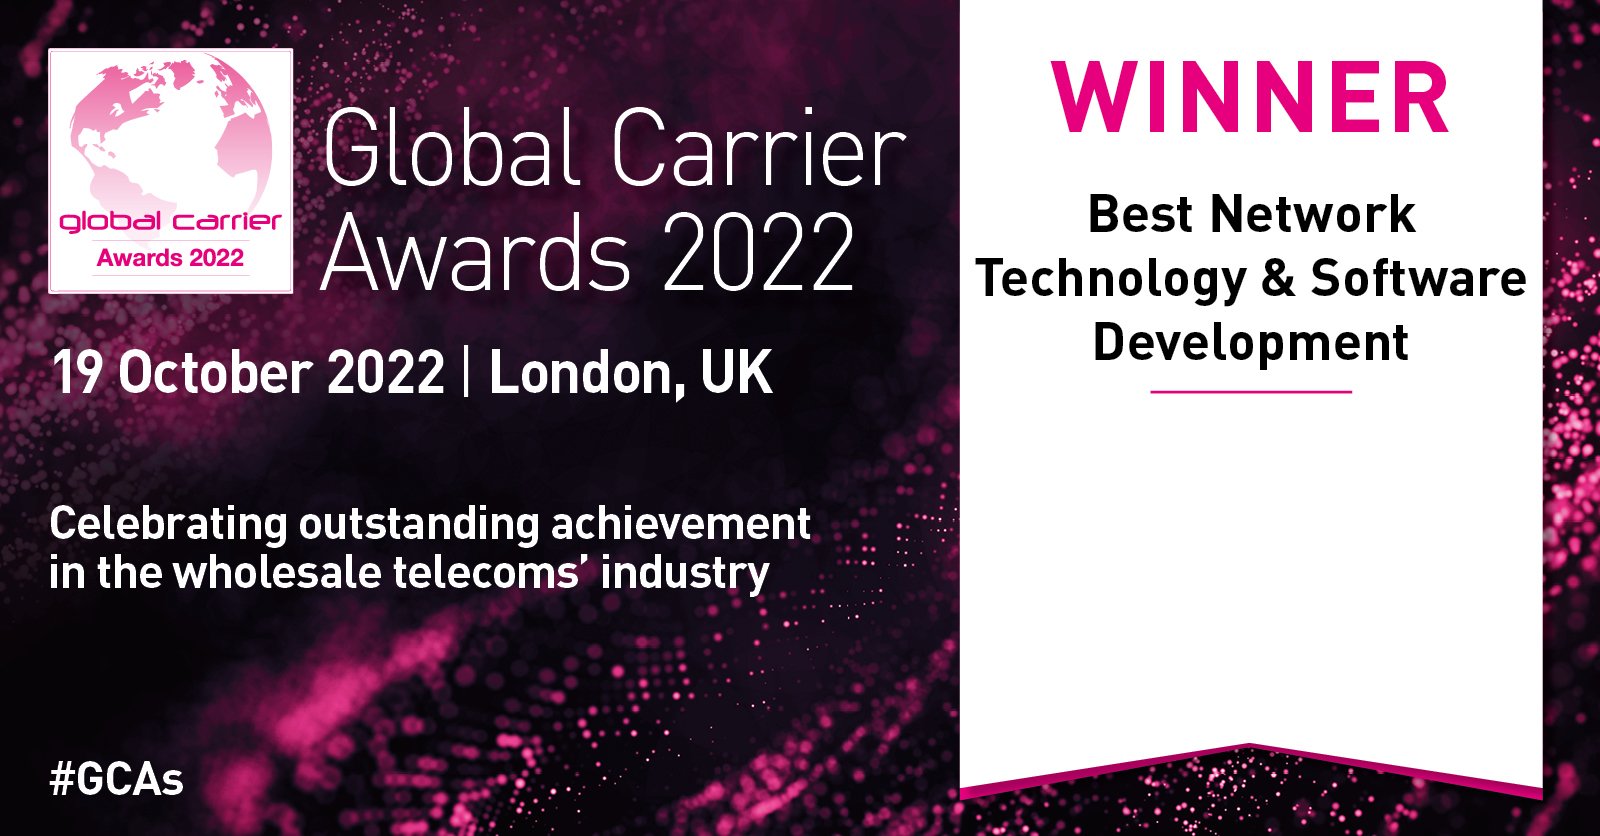 RtBrick wins “Best Network Technology & Software Development” at the Carrier Community Global Awards